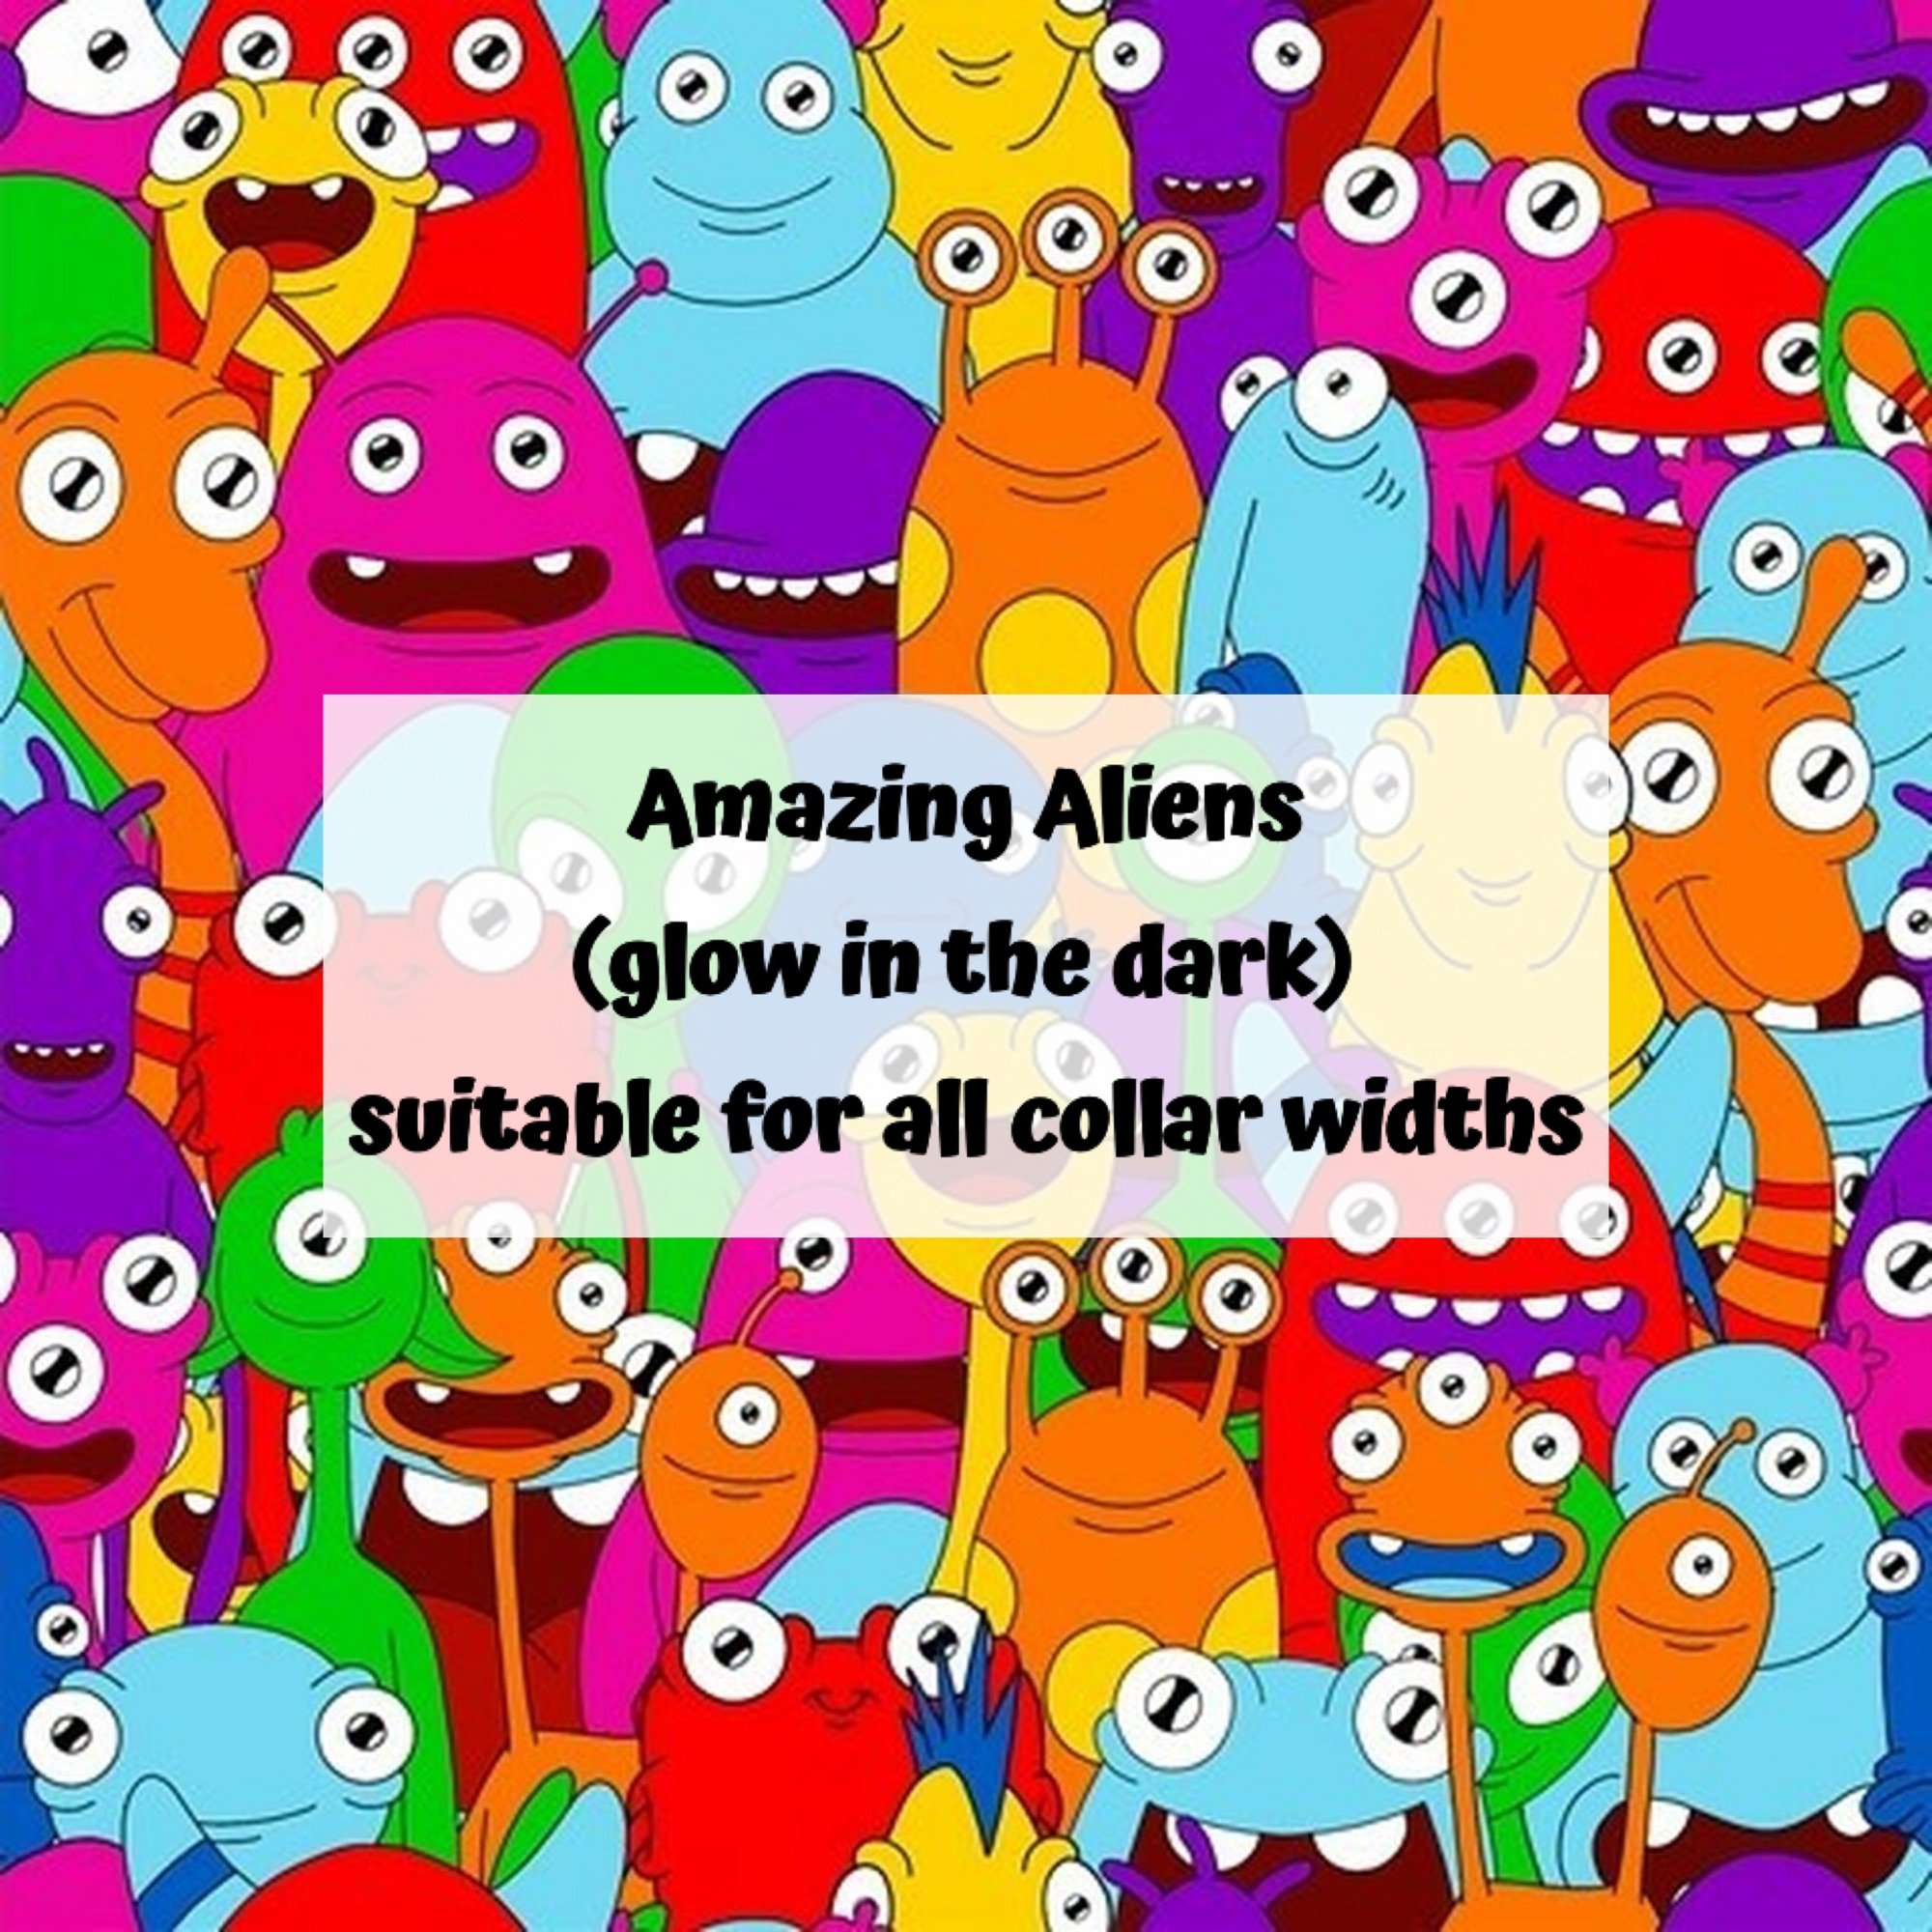 Amazing Aliens (glow in the dark)